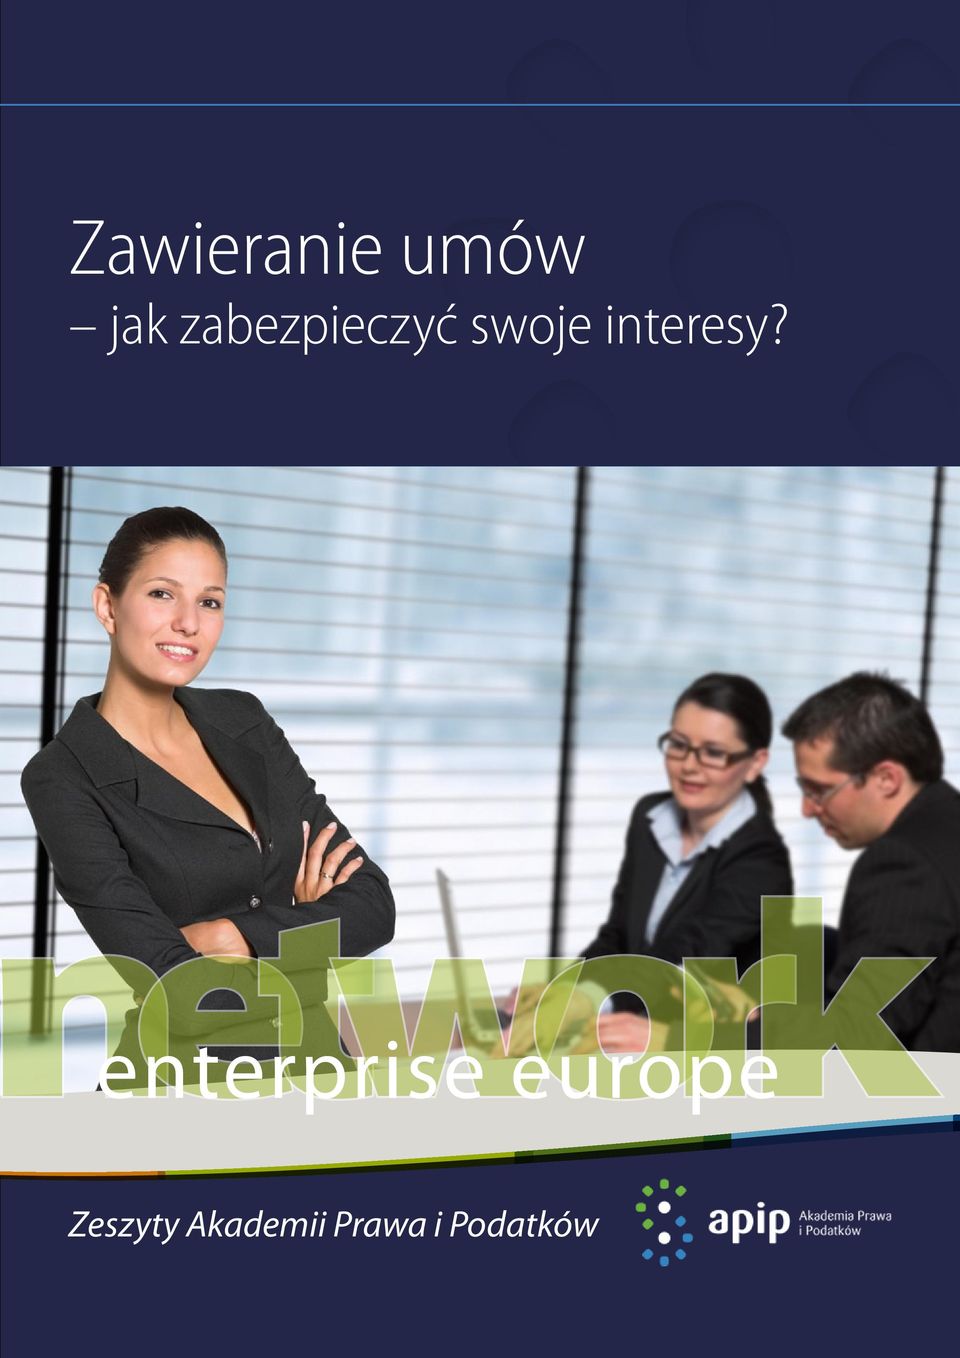 etwork enterprise europe